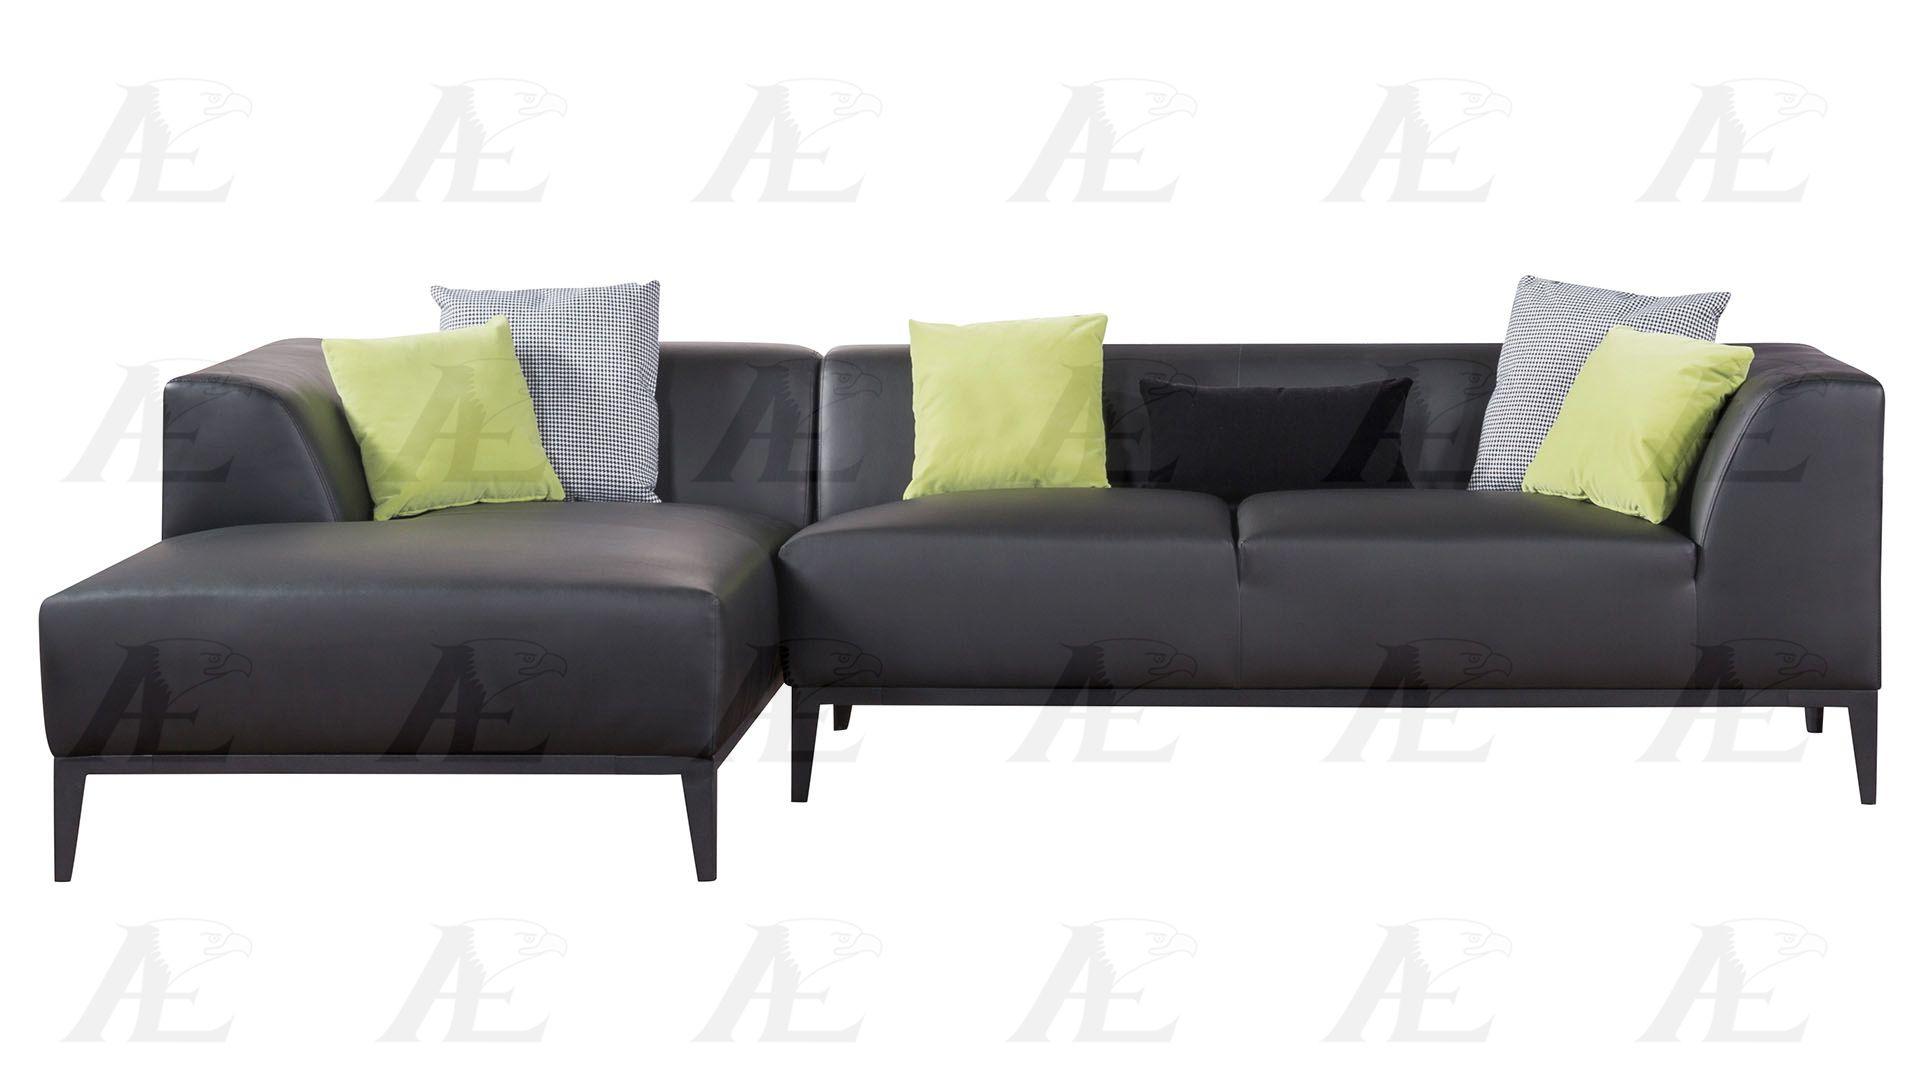 

    
American Eagle Furniture AE-LD818-BK Sofas and Chaise Black AE-LD818-BK Set-3 LHC
